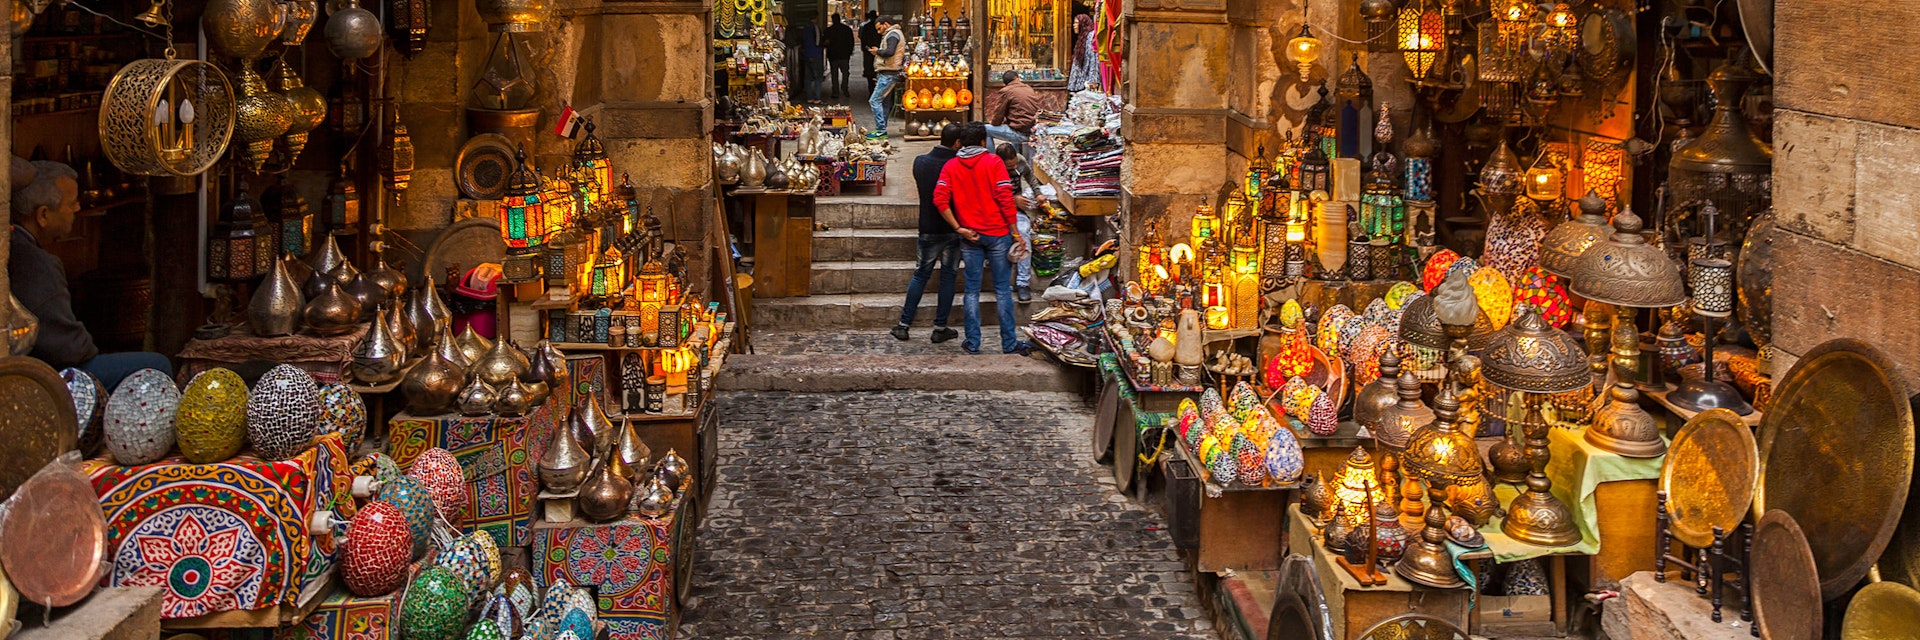 Lantern shop in the Khan El Khalili market in Cairo.